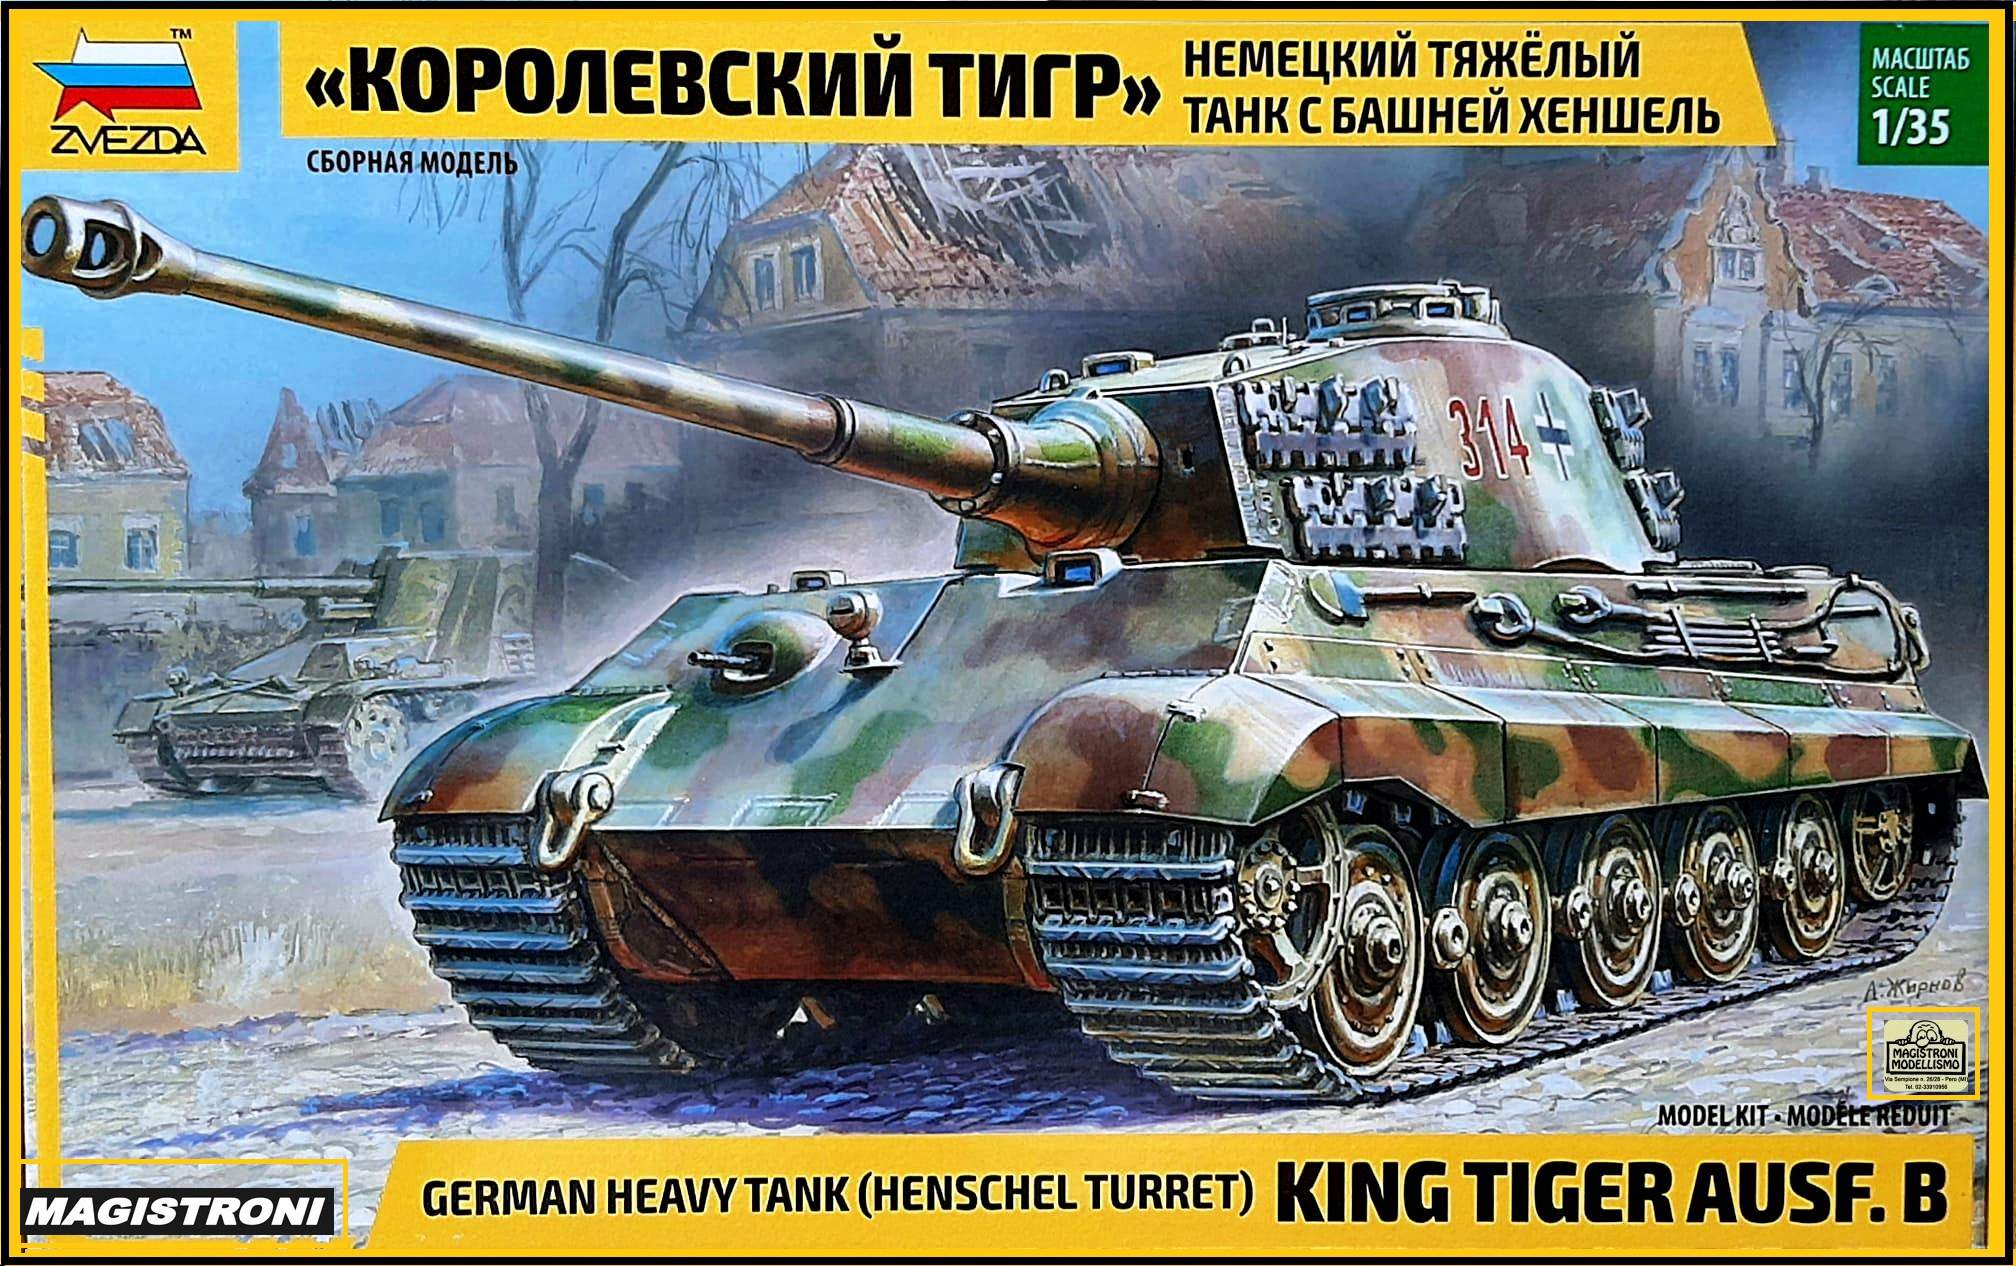 GERMAN HEAVY TANK KING TIGER Ausf, B.